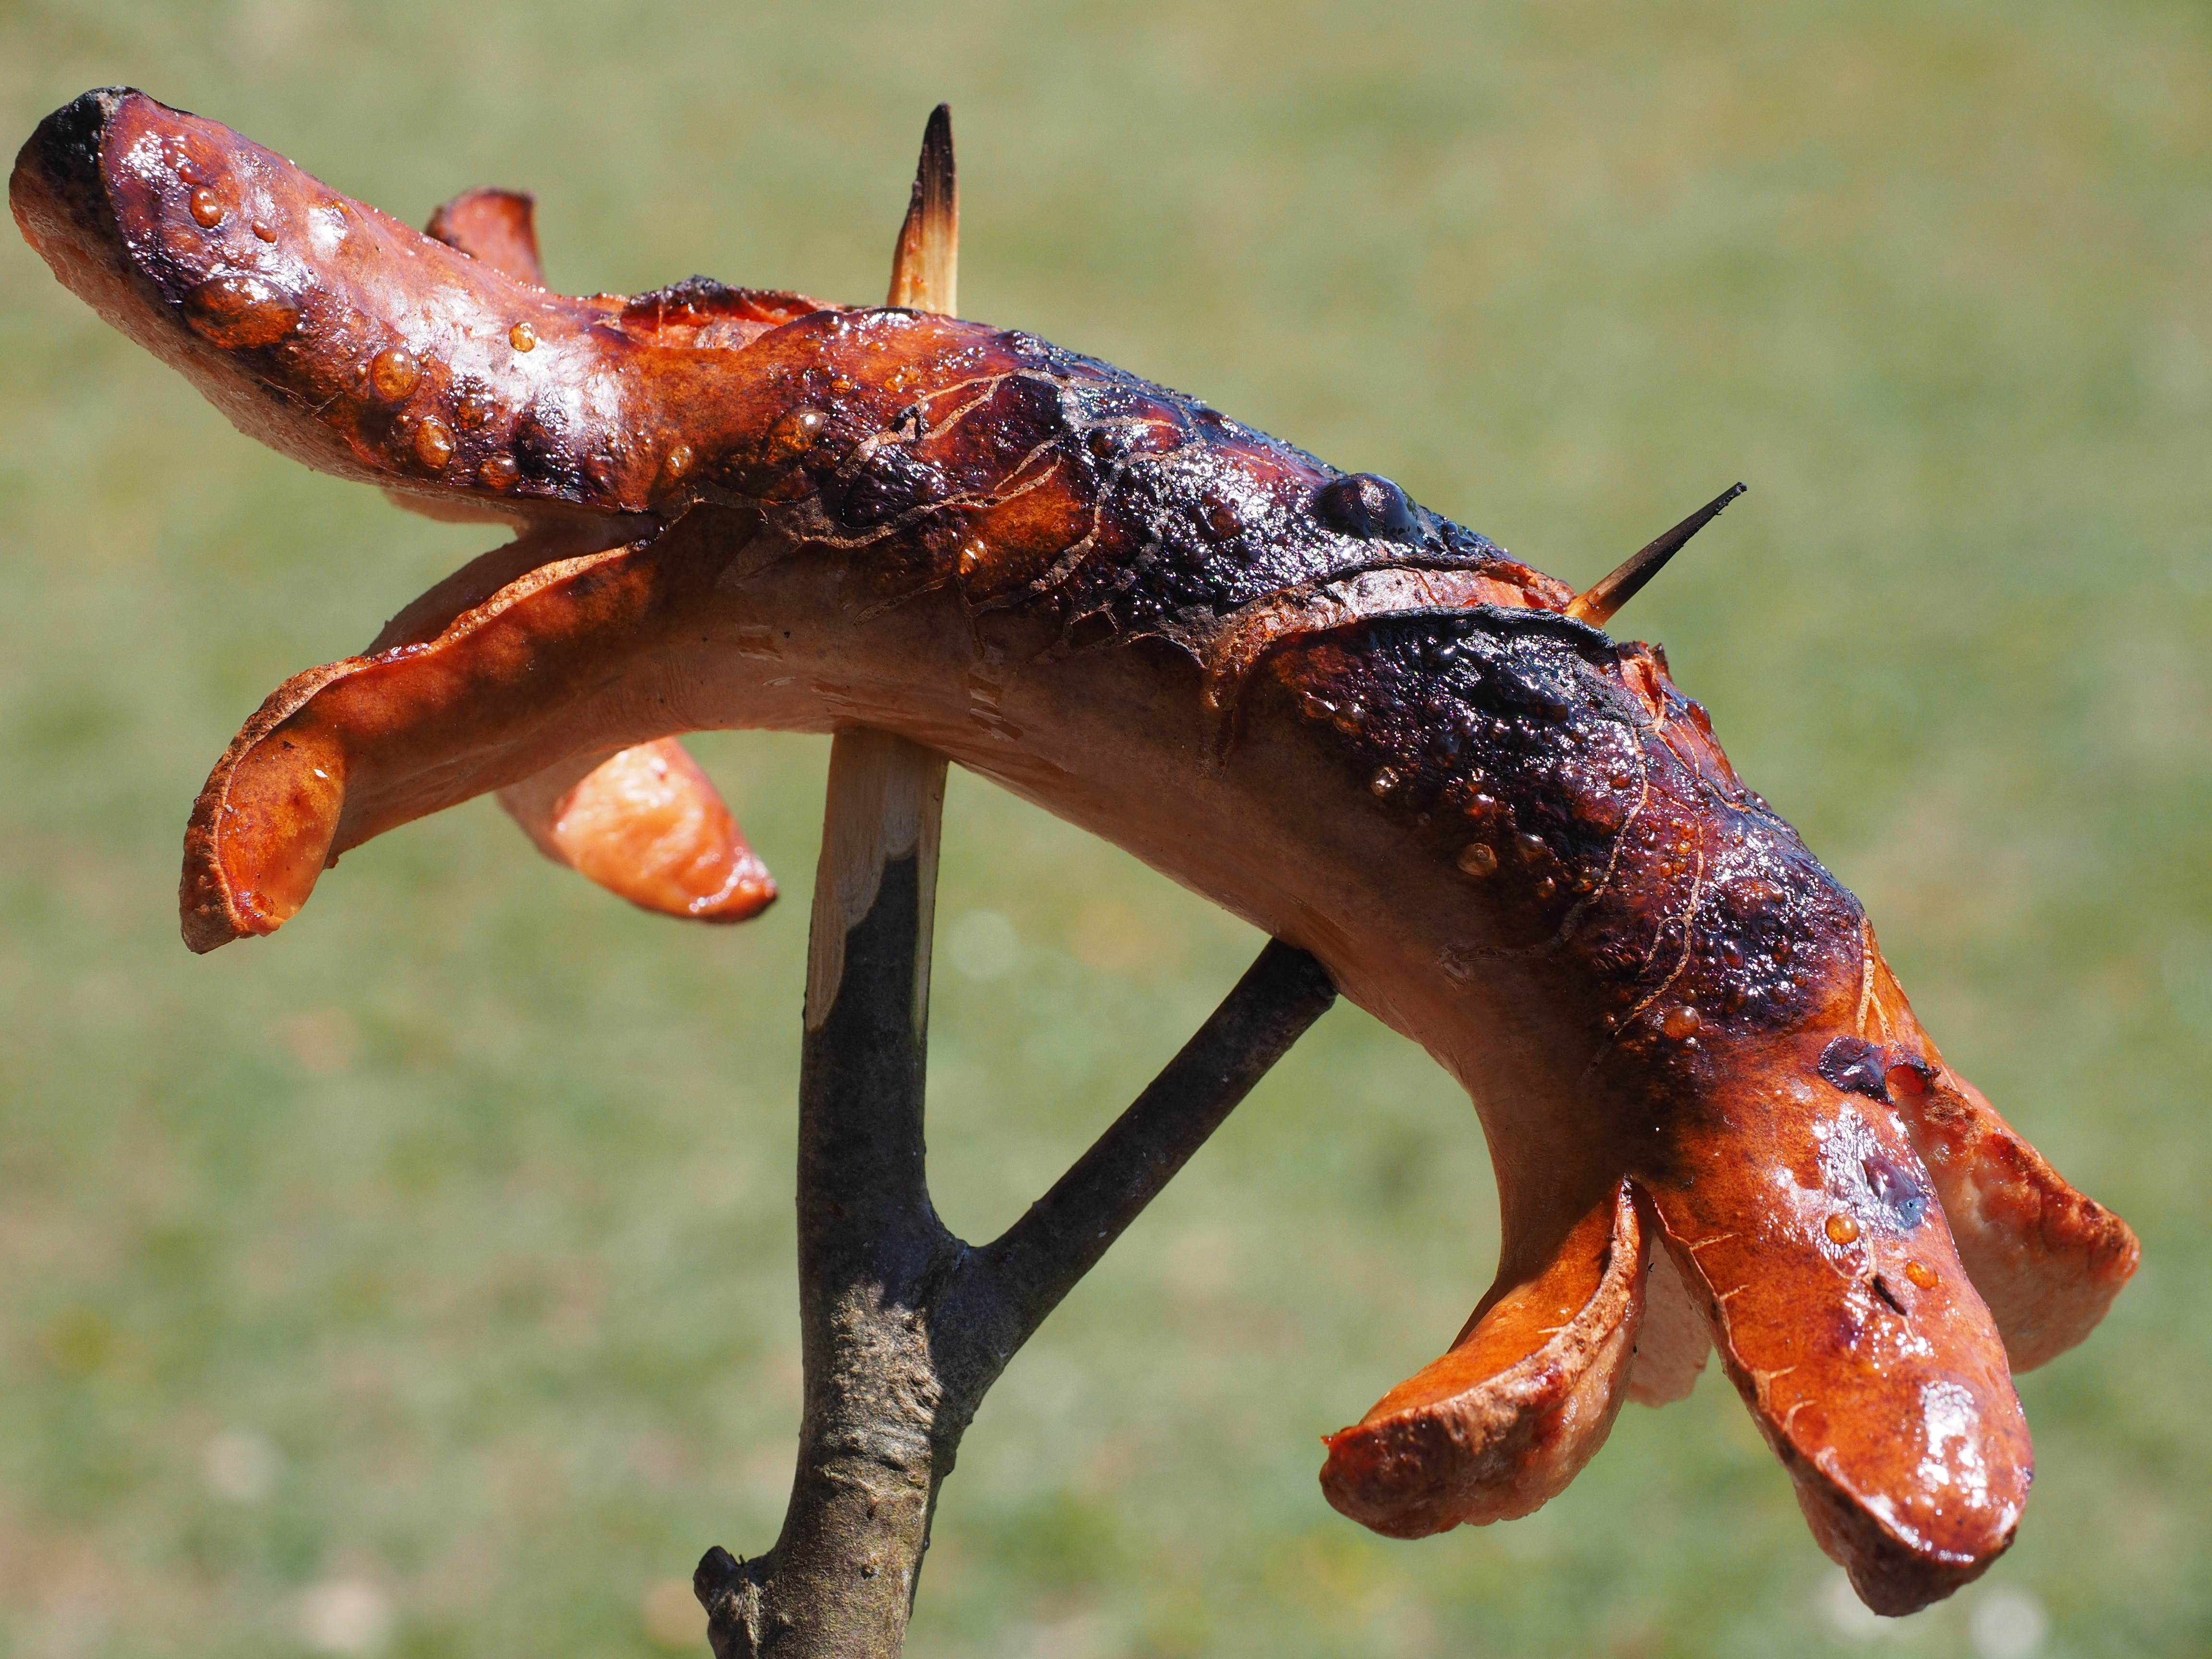 grilled hotdog on brown stick